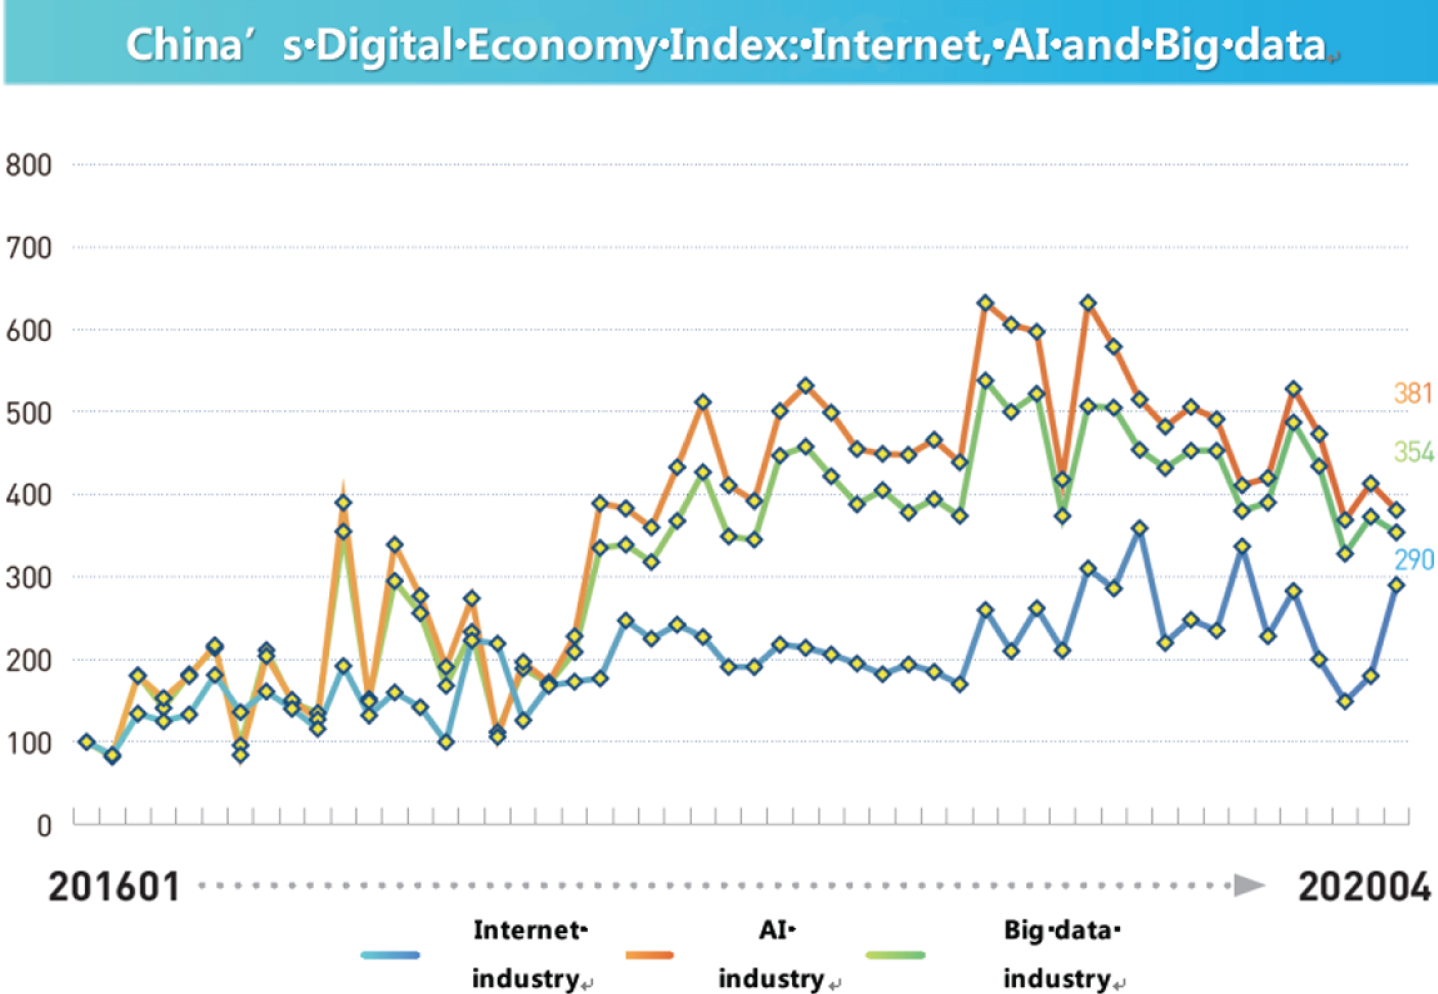 China’s Digital Economic Index: Internet, AI and Big data, 2020.04.